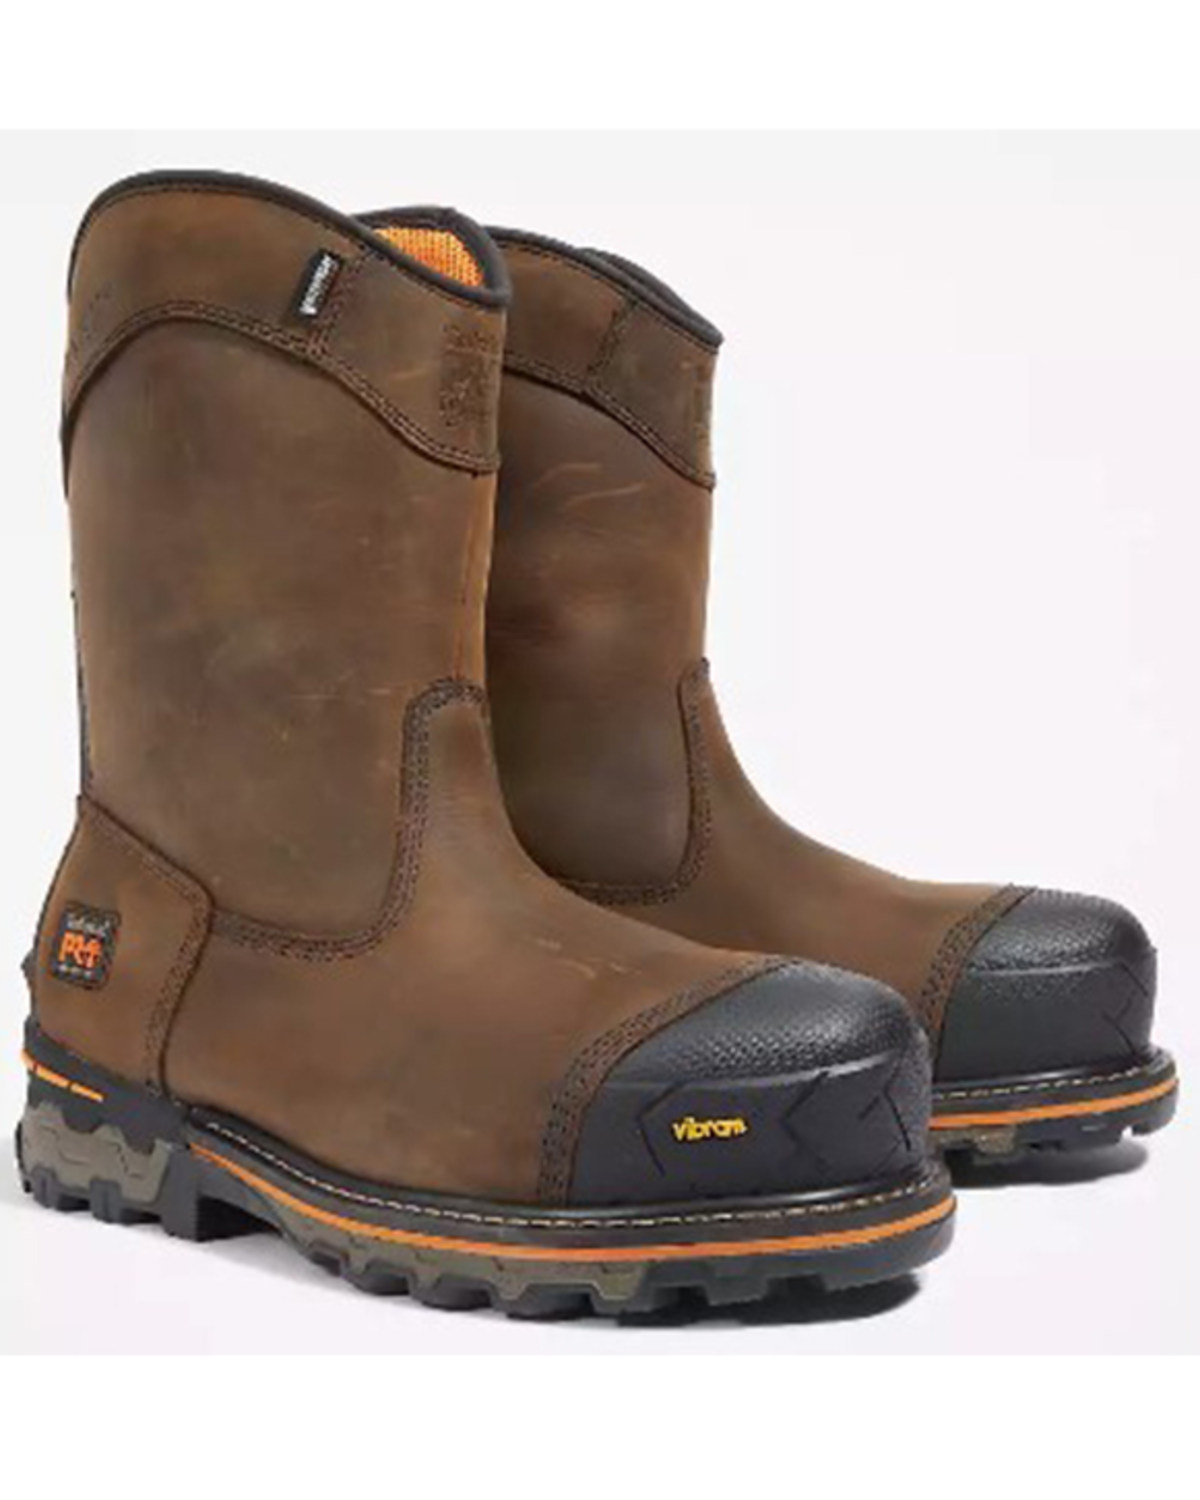 Timberland Pro Men's Boondock Waterproof Pull-On Work Boots - Composite Toe